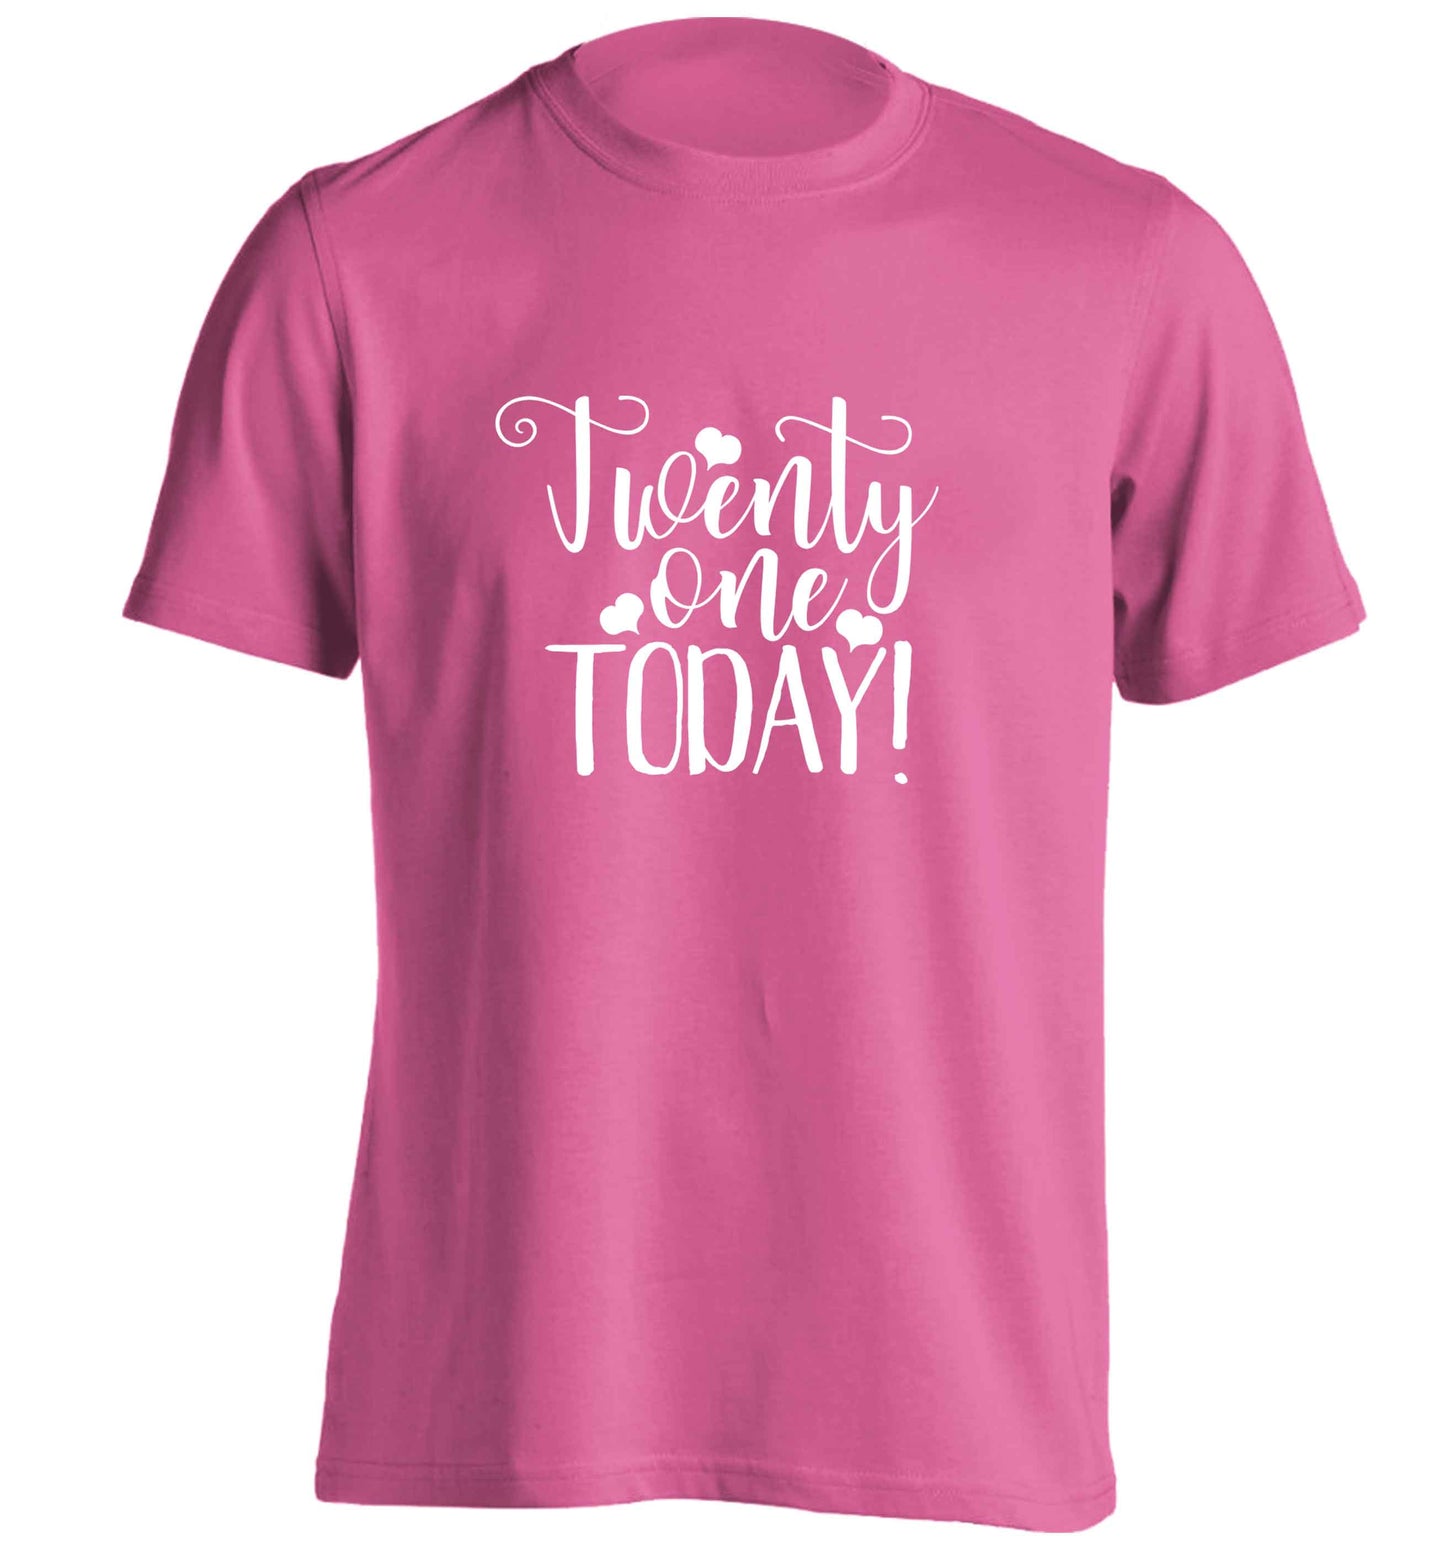 Twenty one today!adults unisex pink Tshirt 2XL